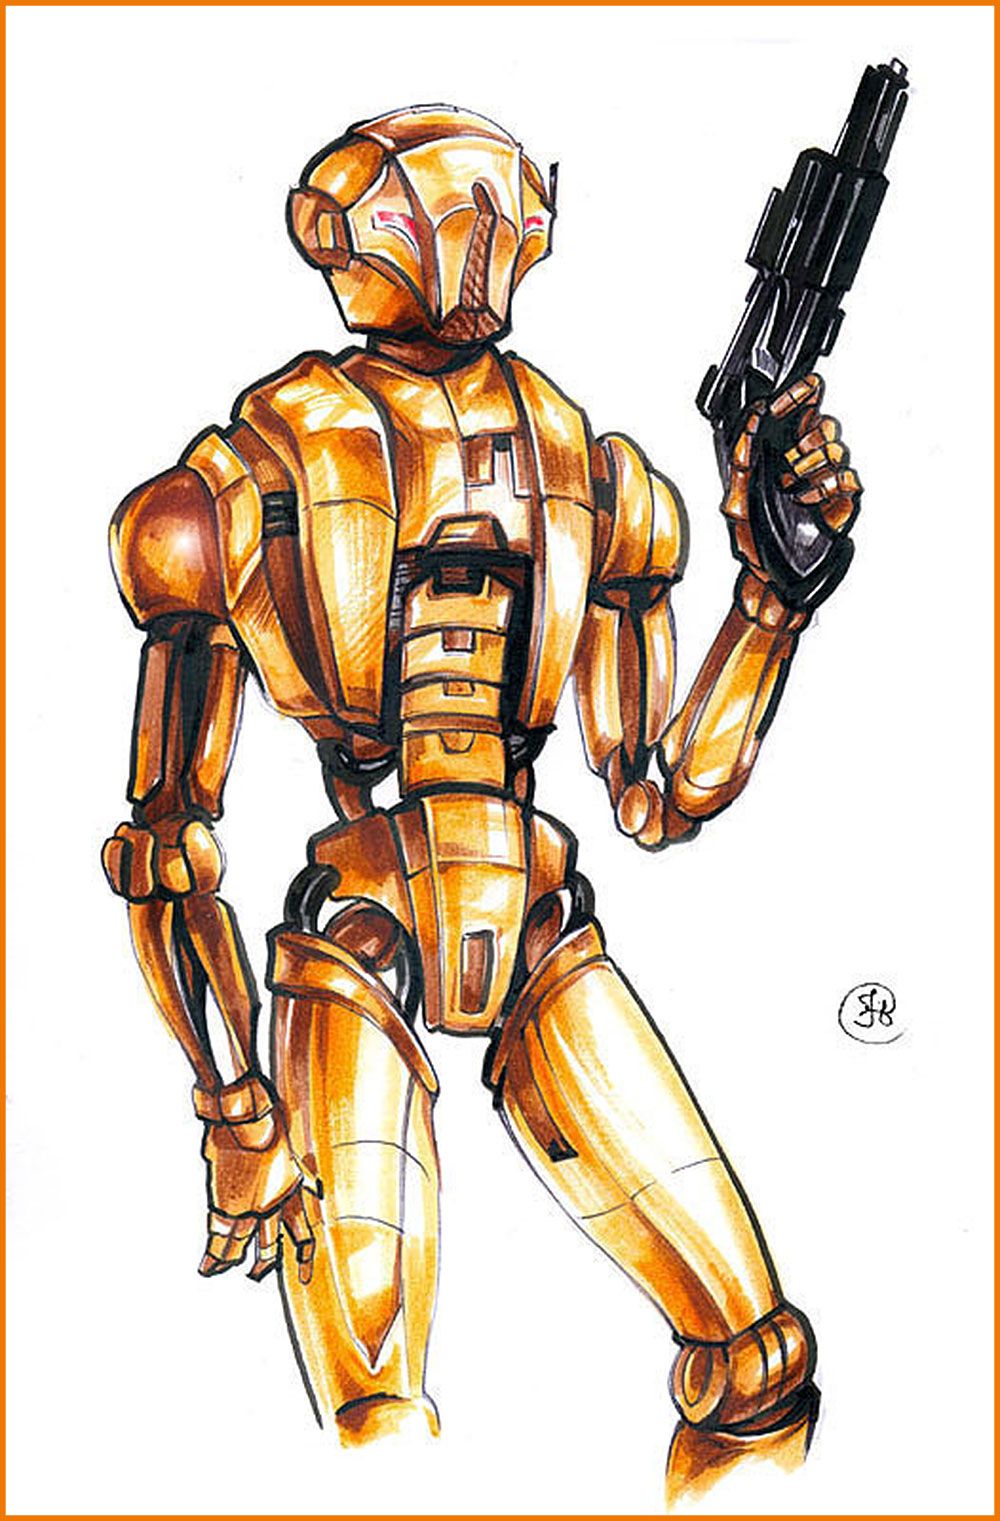 Fan art rendition of the HK-47 assassin droid